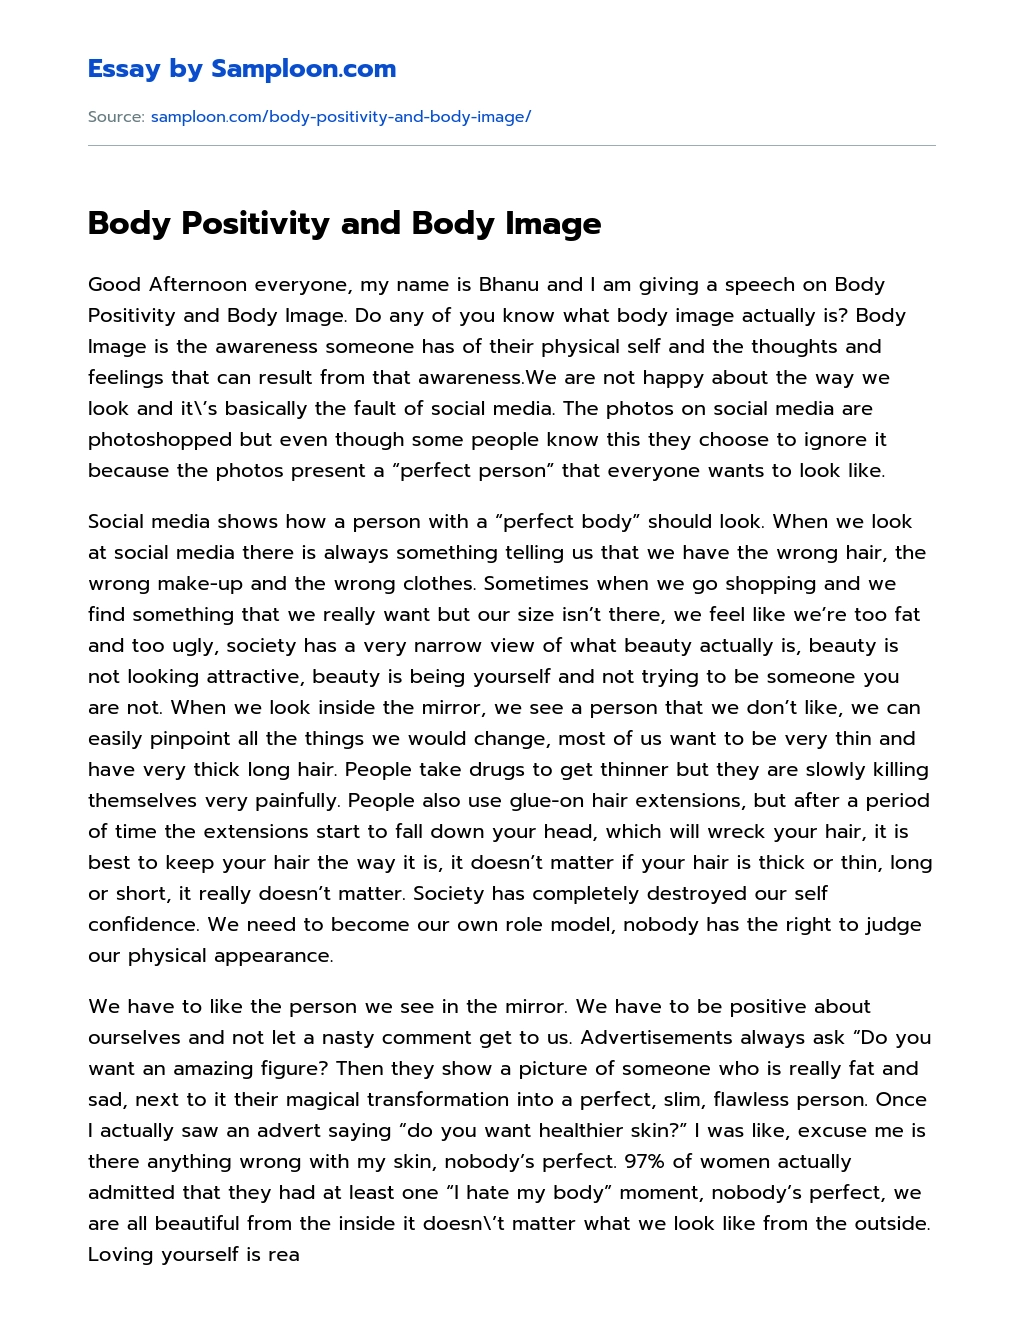 Body Positivity and Body Image essay